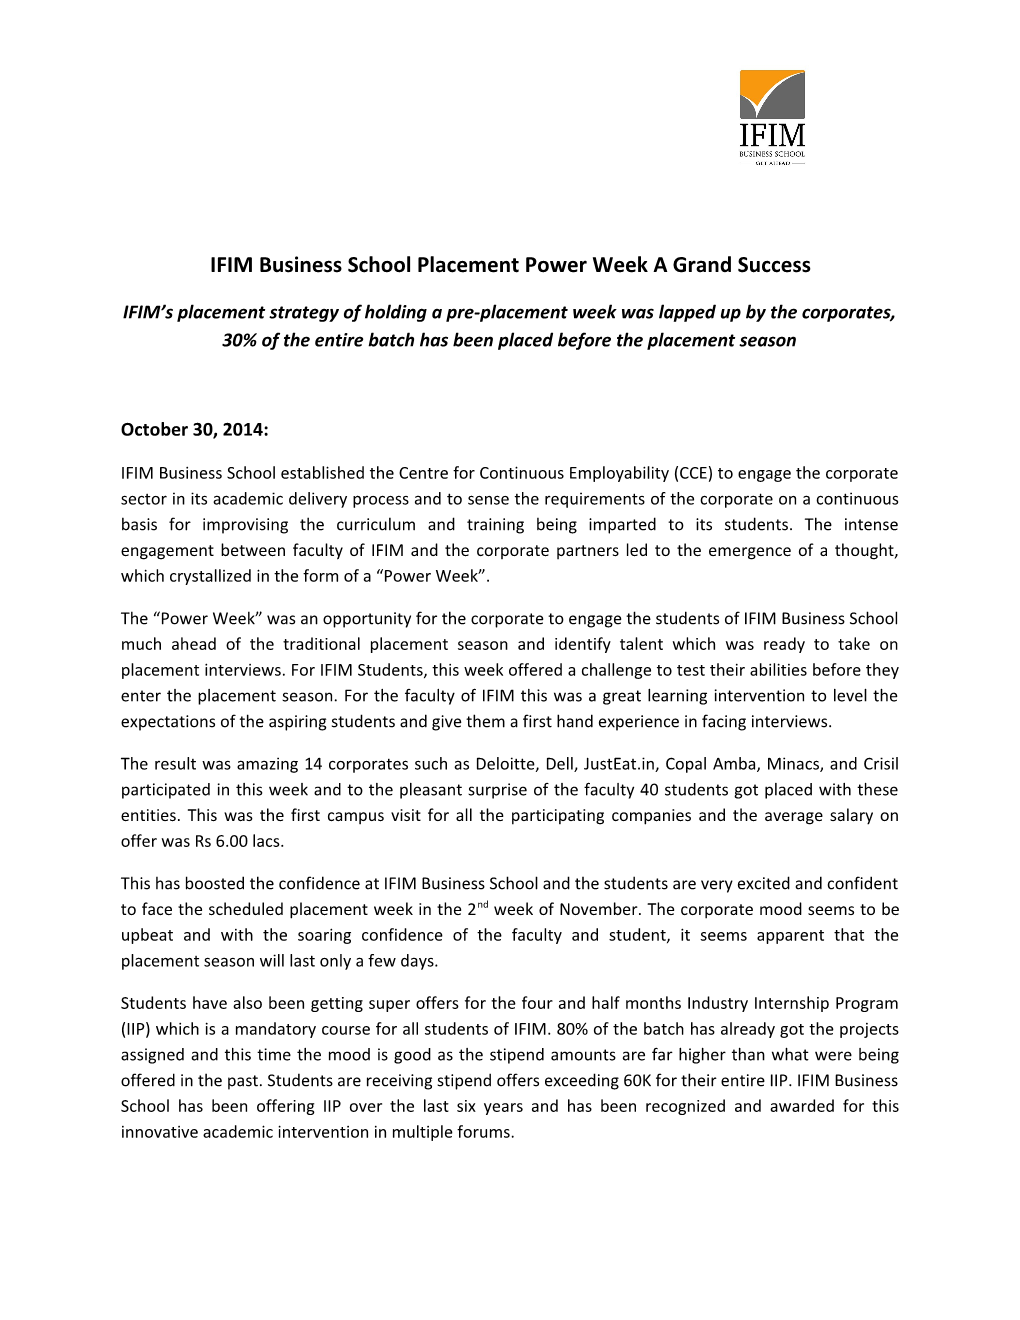 IFIM Business School Placement Power Week a Grand Success